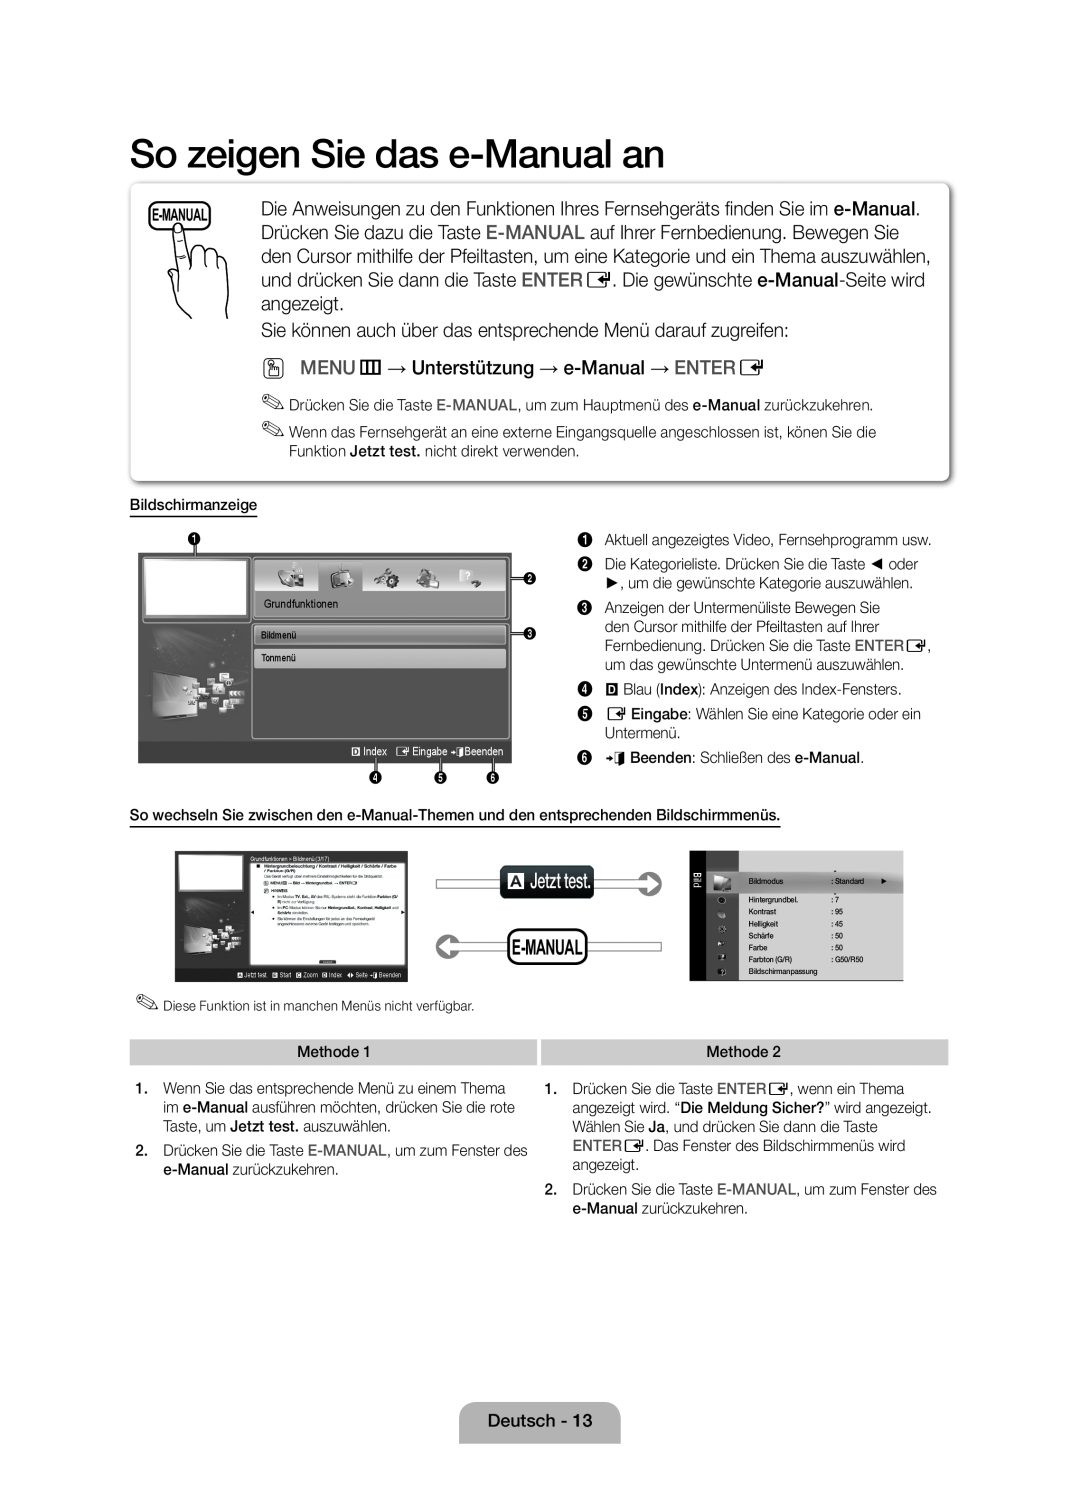 Samsung UE40D5000PWXXC So zeigen Sie das e-Manual an, aJetzt test, angezeigt, OO MENUm→ Unterstützung → e-Manual → ENTERE 